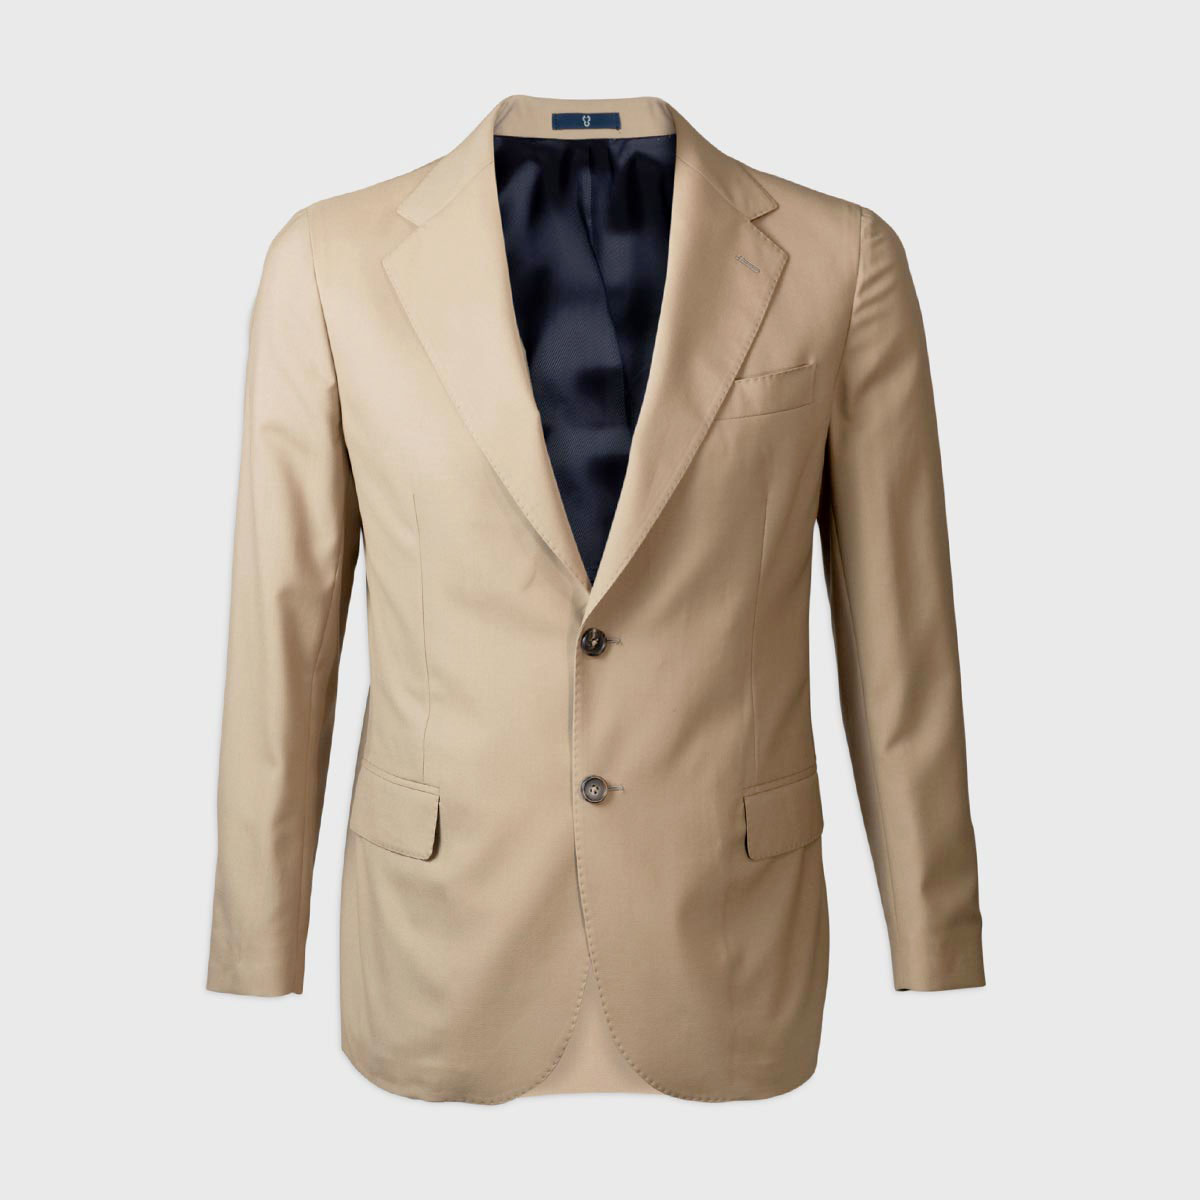 Half-lined single-breasted jacket in 130’S Drago Wool – Beige Melillo 1970 on sale 2022